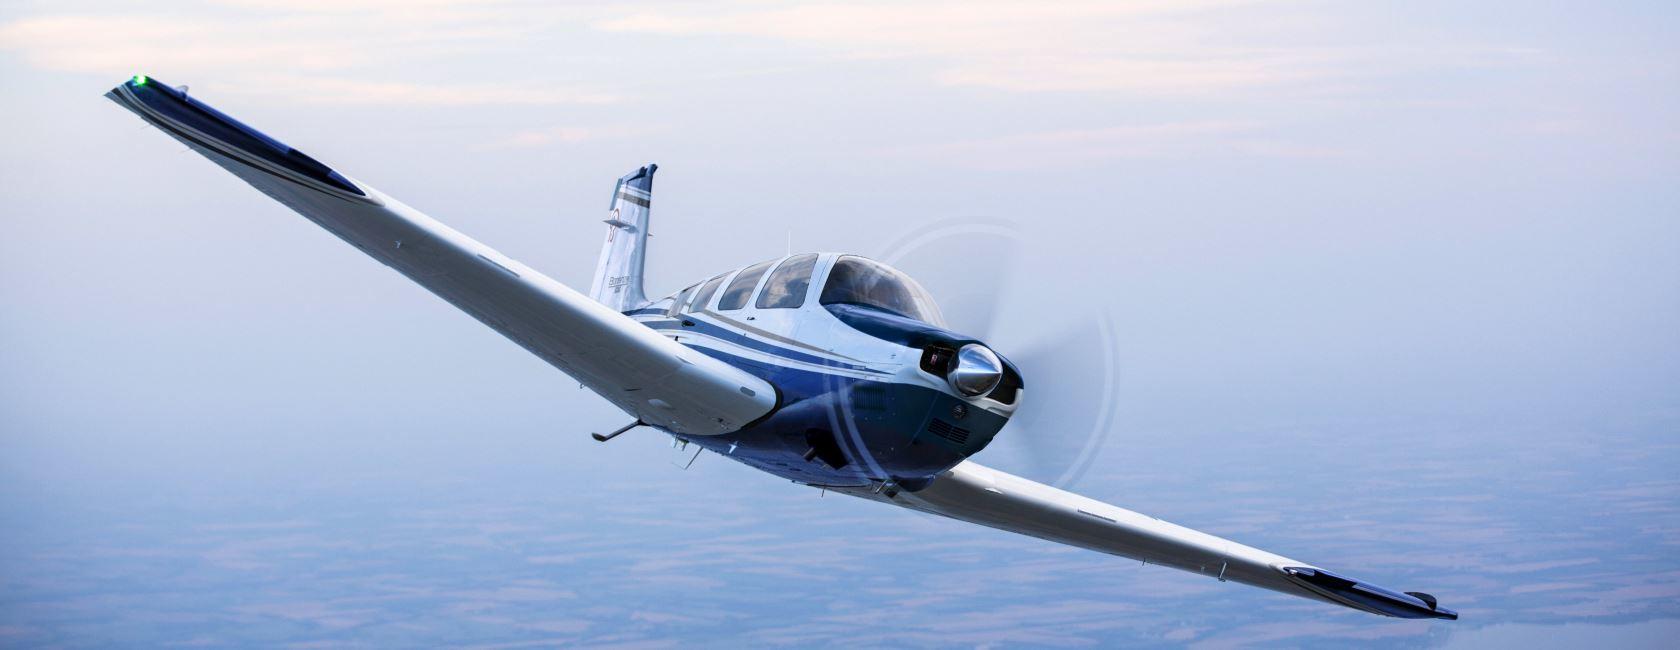 Enhanced Flight Deck Features for Cessna and Beechcraft Pistons